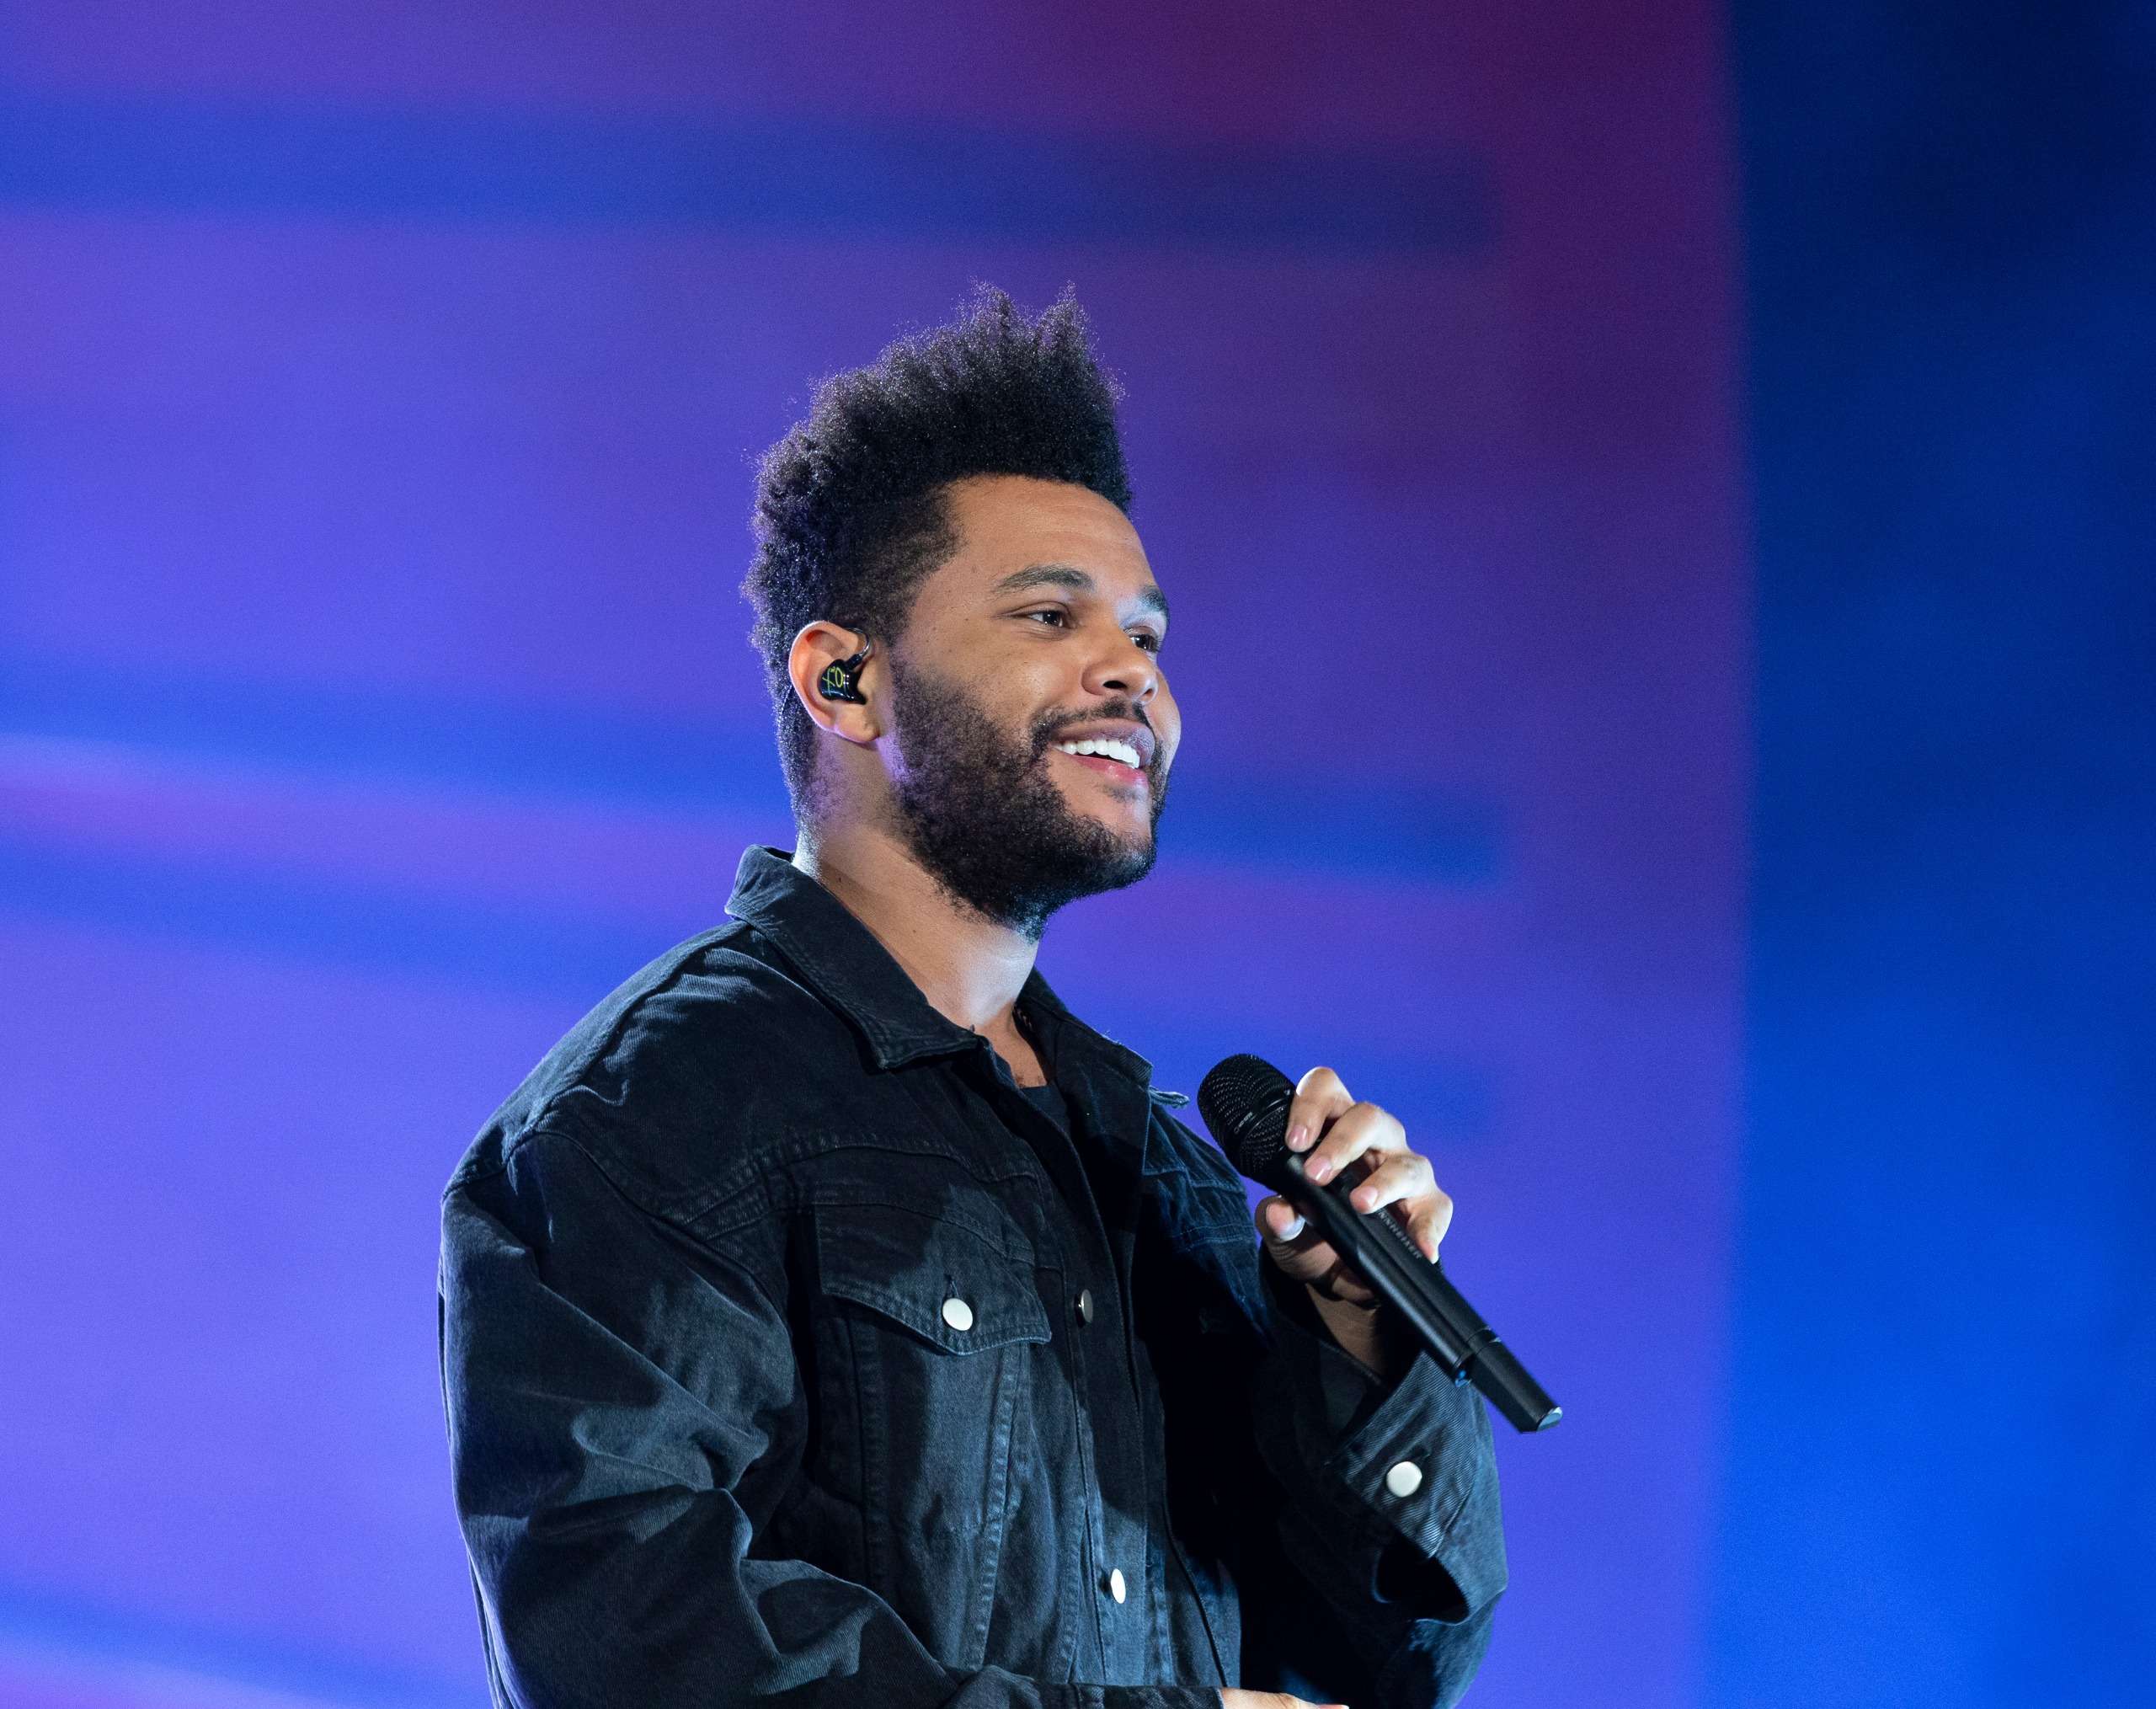 The Weeknd en un concierto en 2018 / Shutterstock